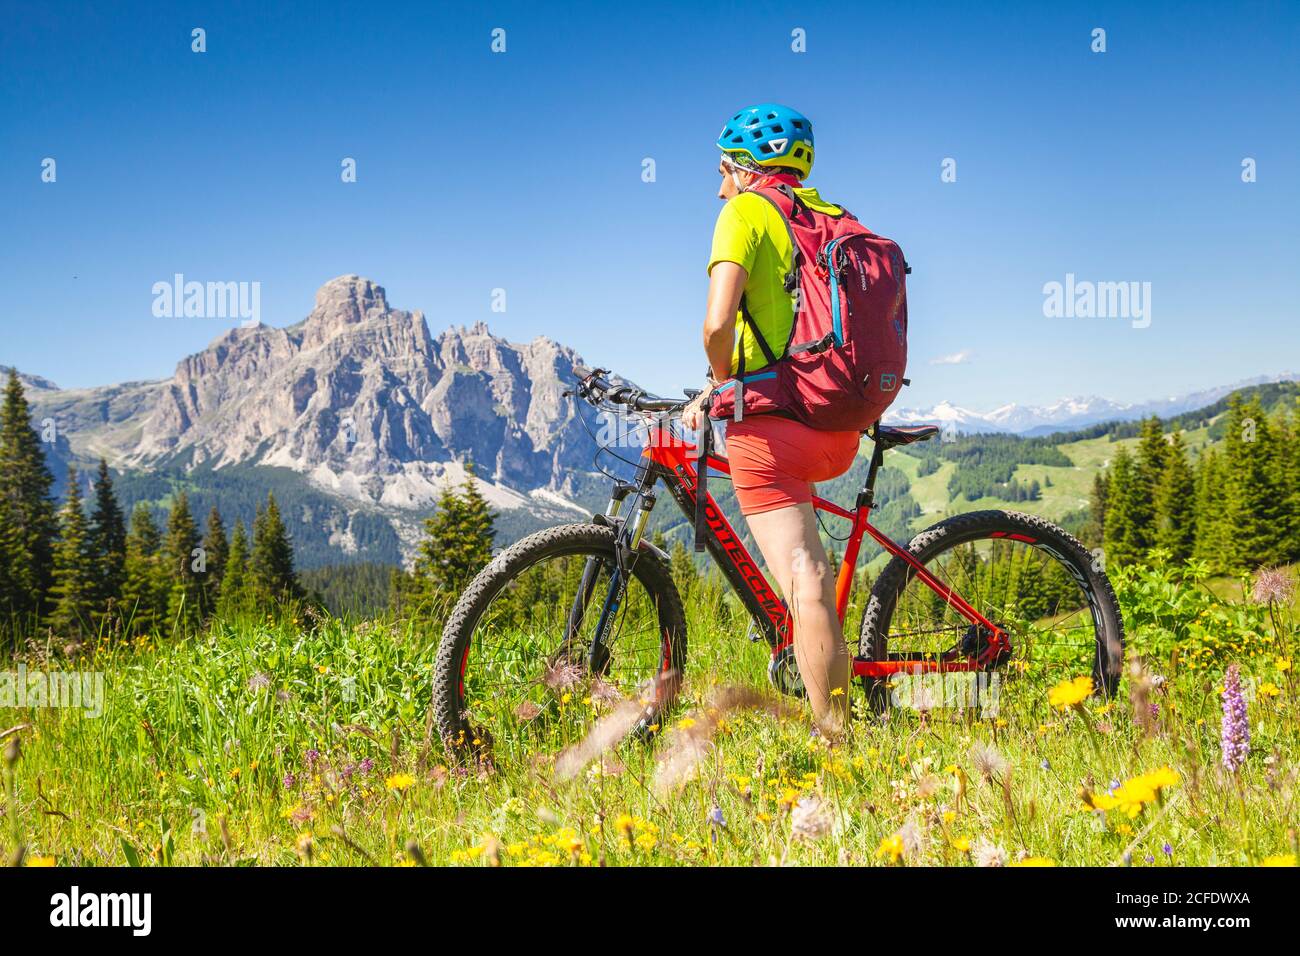 Frau mit E-Bike in der Naturlandschaft des Monte cherz, dolomiten, livinallongo del col di lana, belluno, venetien, italien Stockfoto